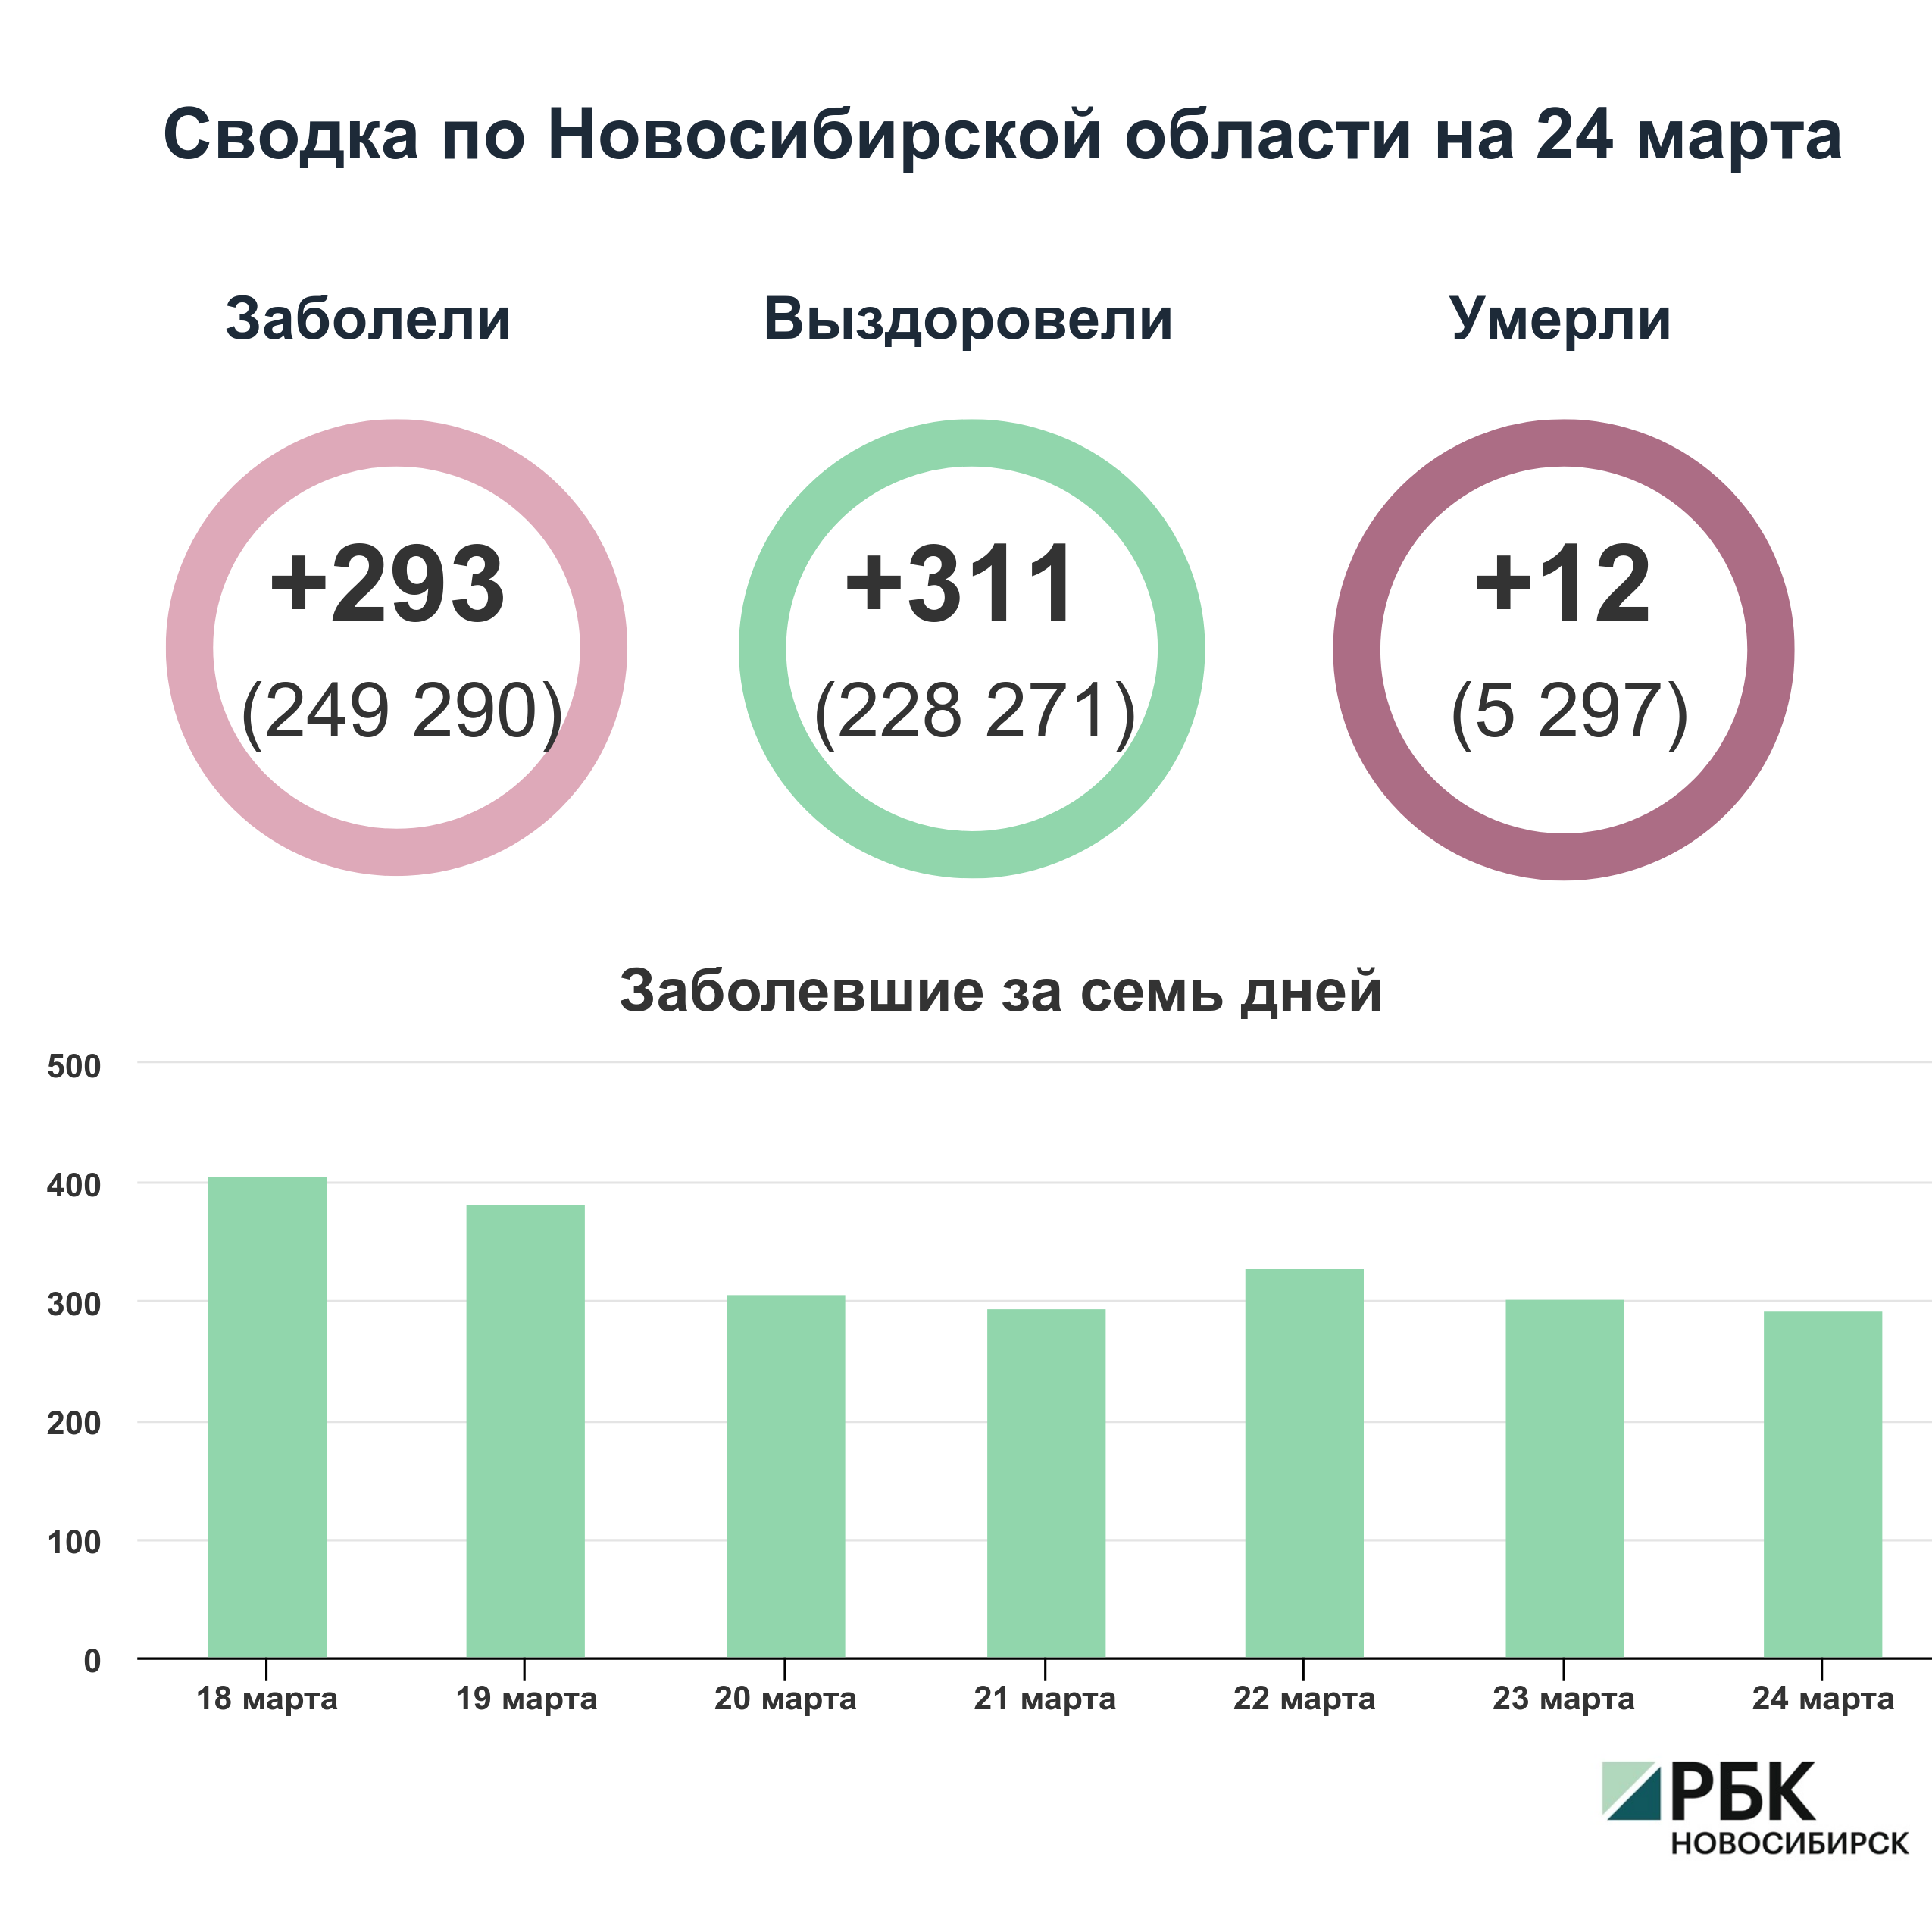 Коронавирус в Новосибирске: сводка на 24 марта